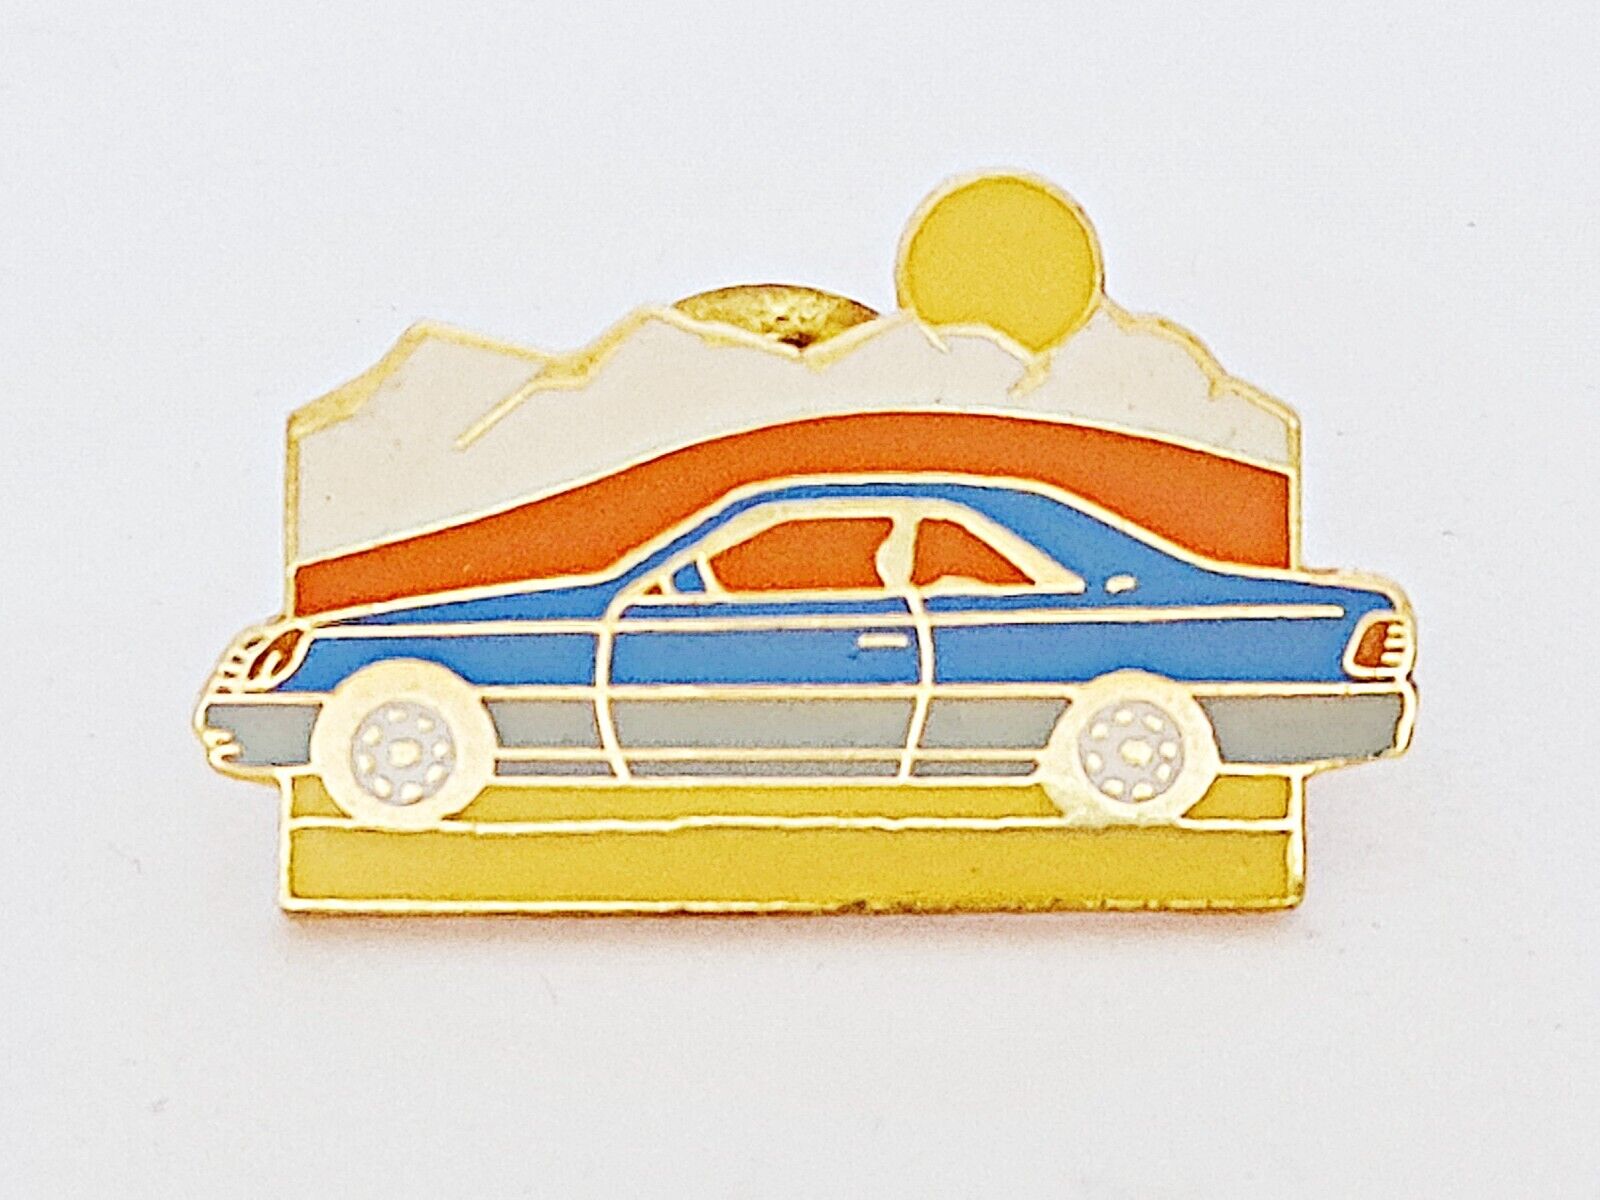 Vintage Authentic Mercedes Benz Limited Edition Enamel Gold Lapel Pin Badge